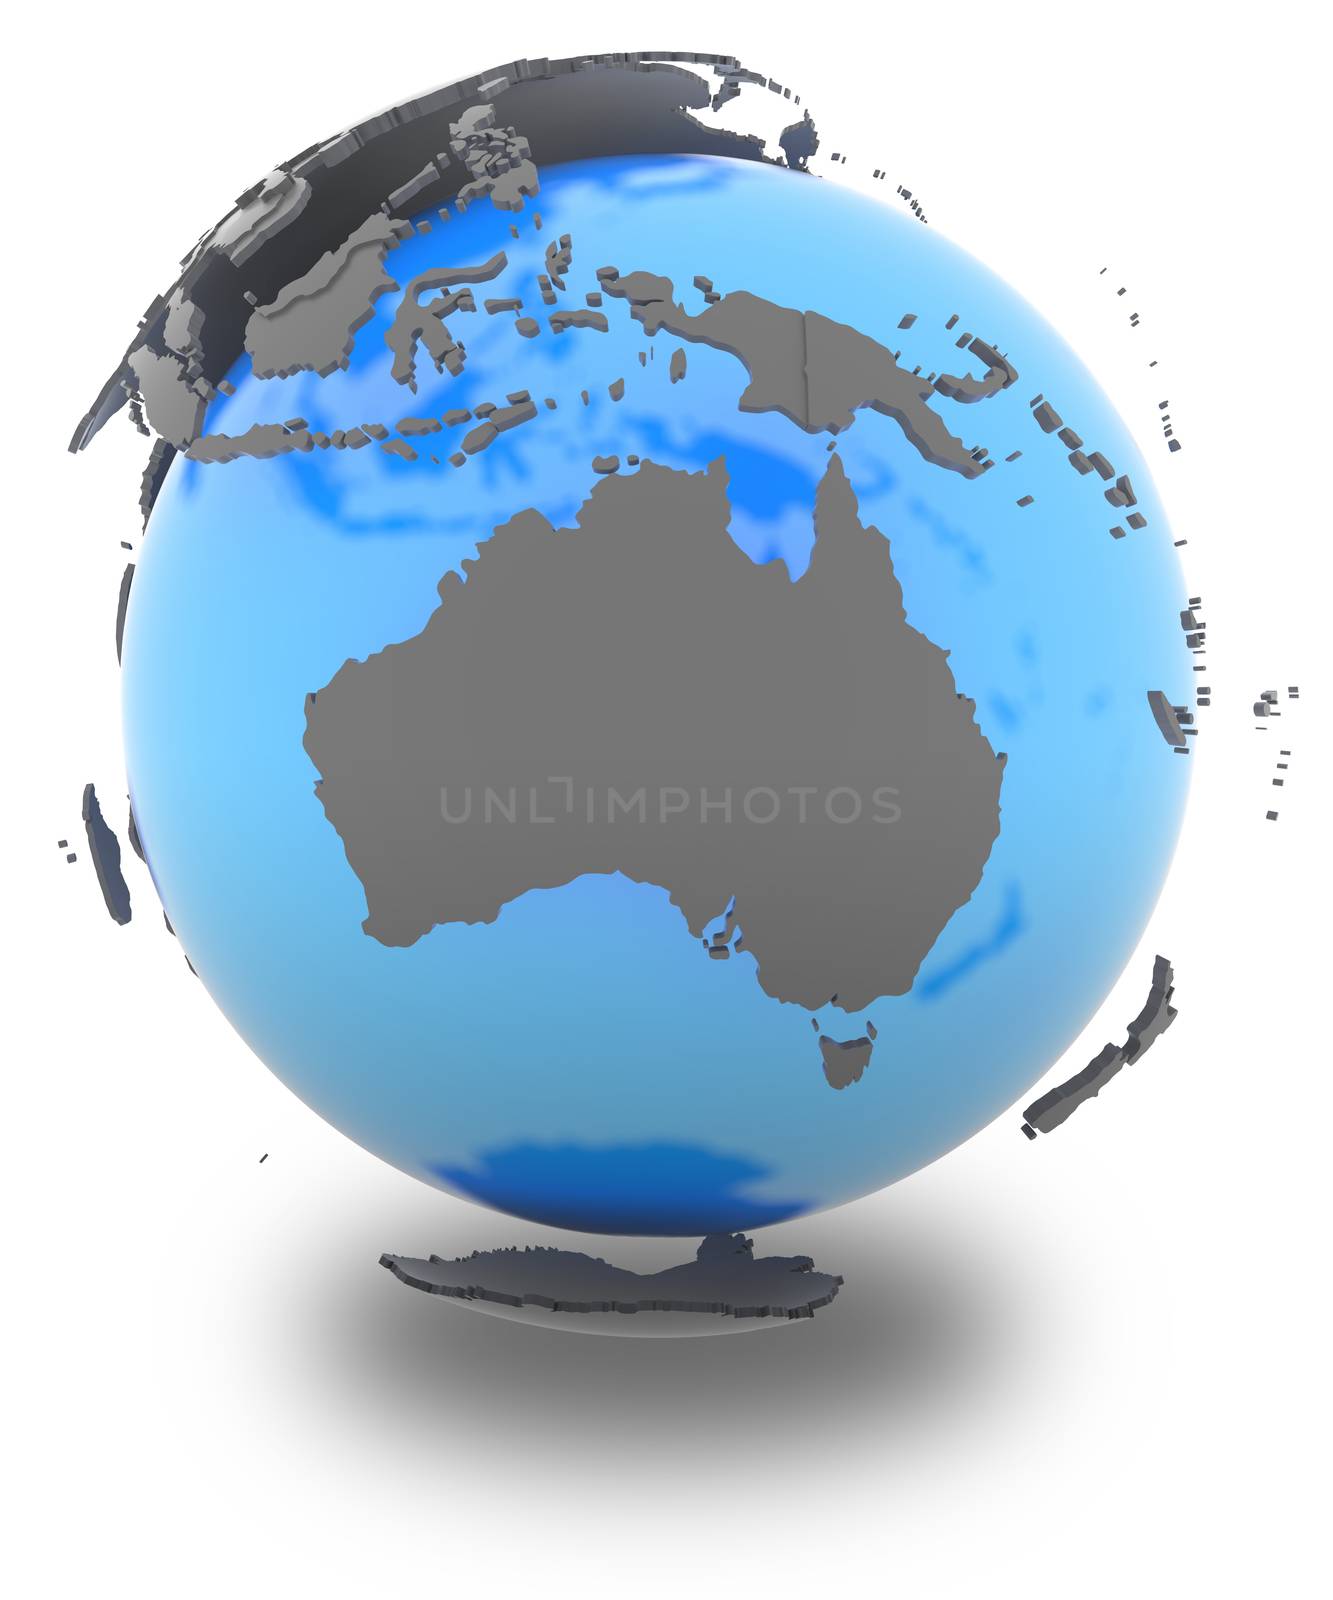 Australia on Earth by Harvepino